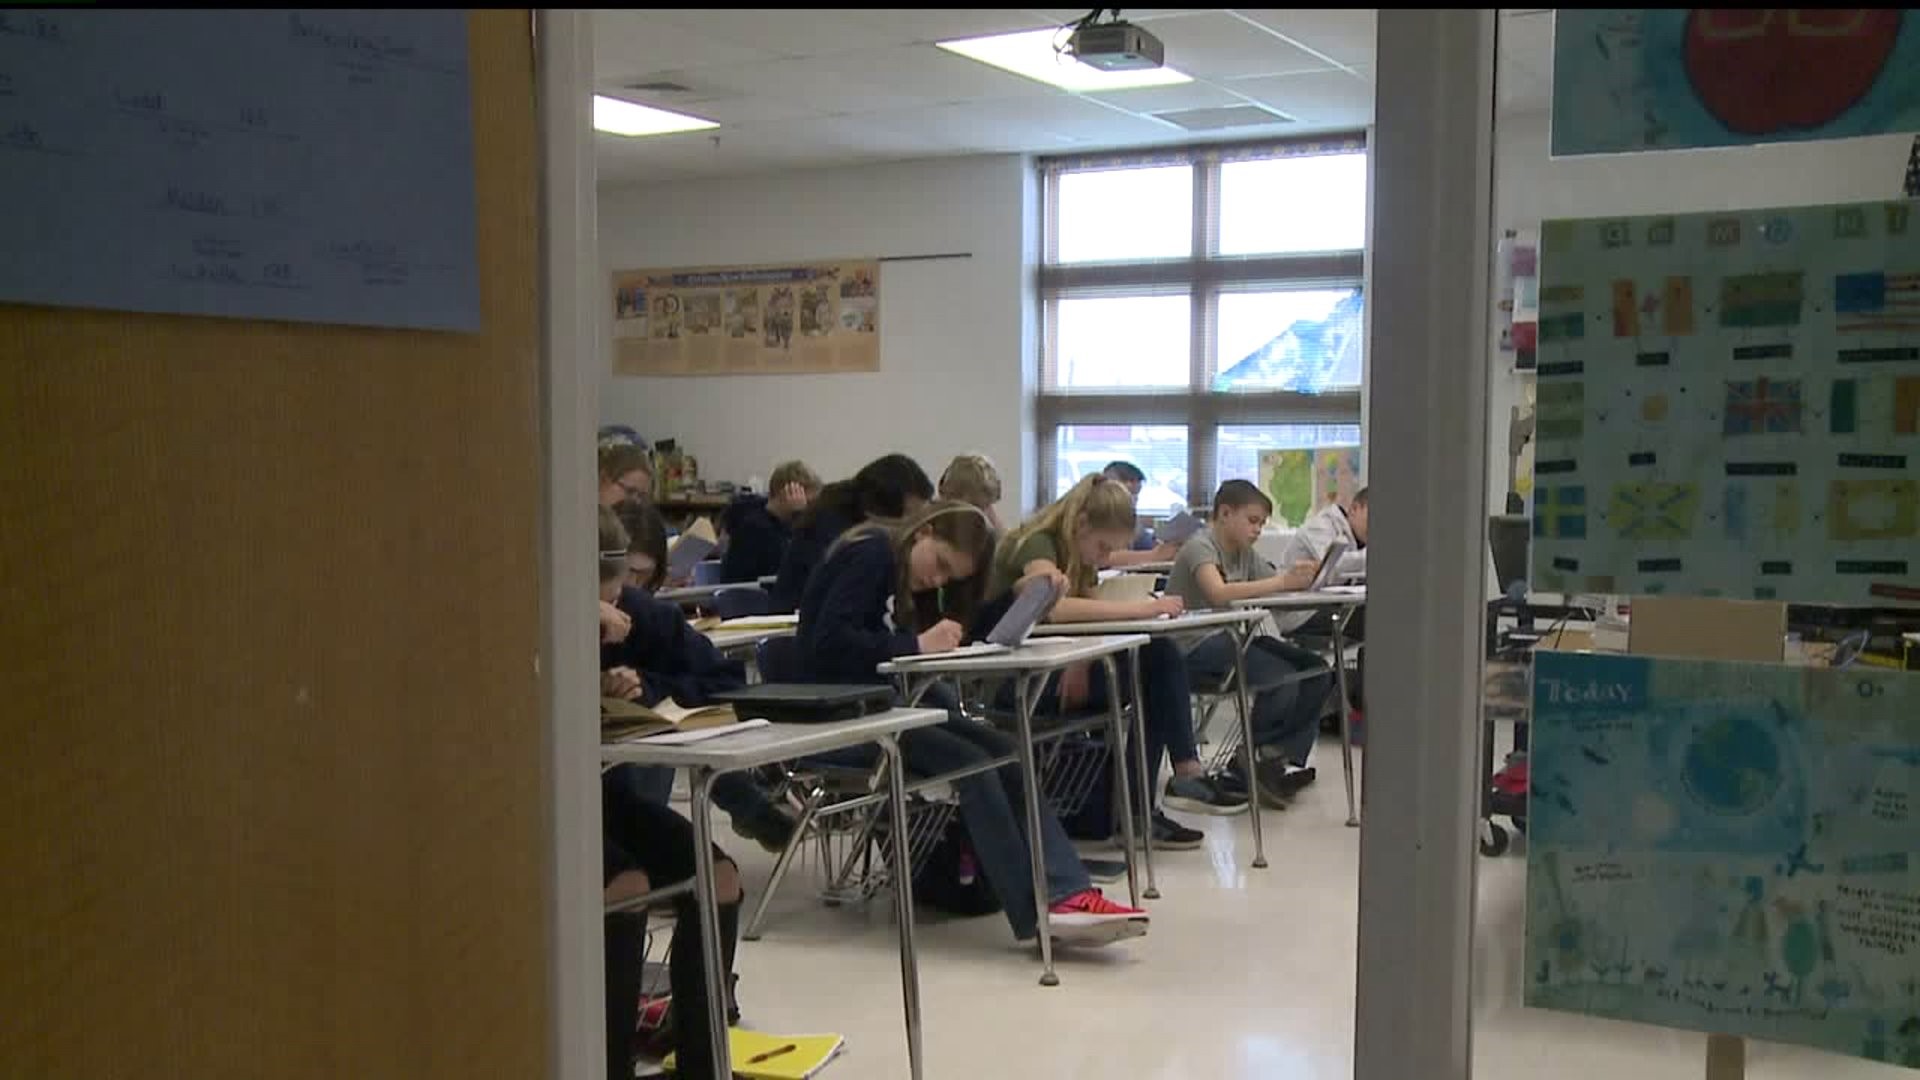 Bureau Valley School District turns down proposal to restructure schools